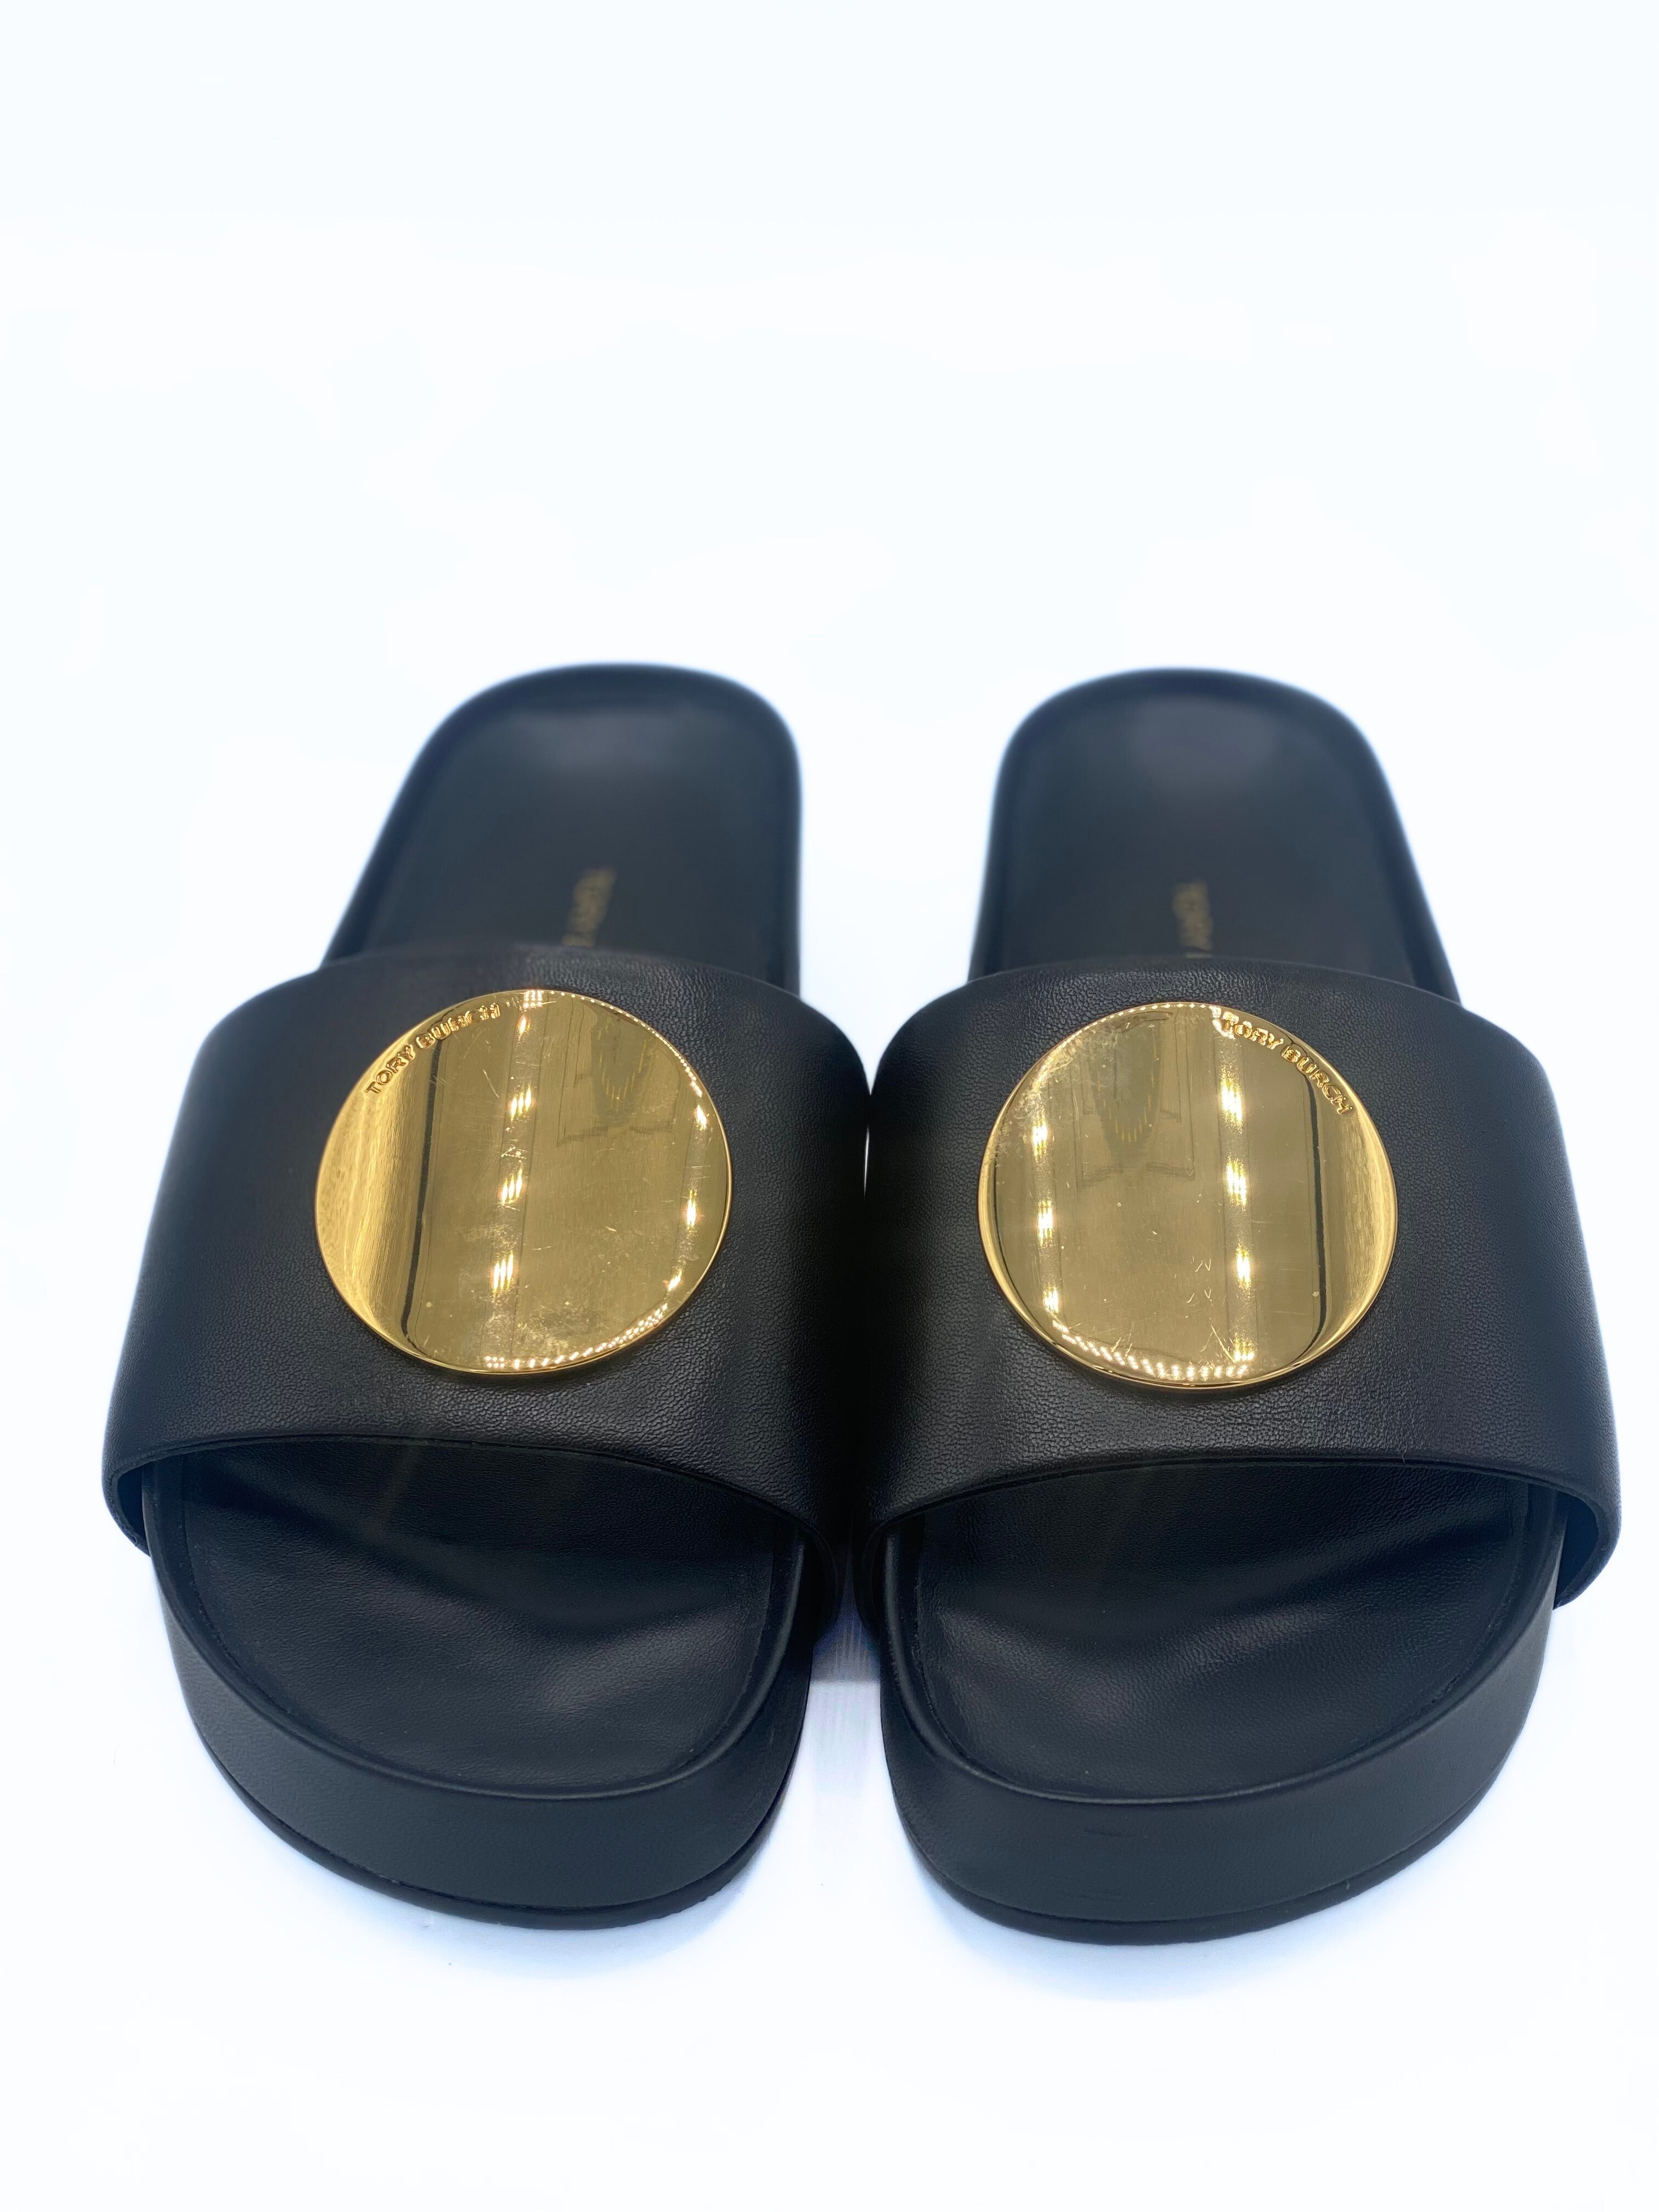 Tory Burch Patos Leather Platform Slide Sandals (US 5M)